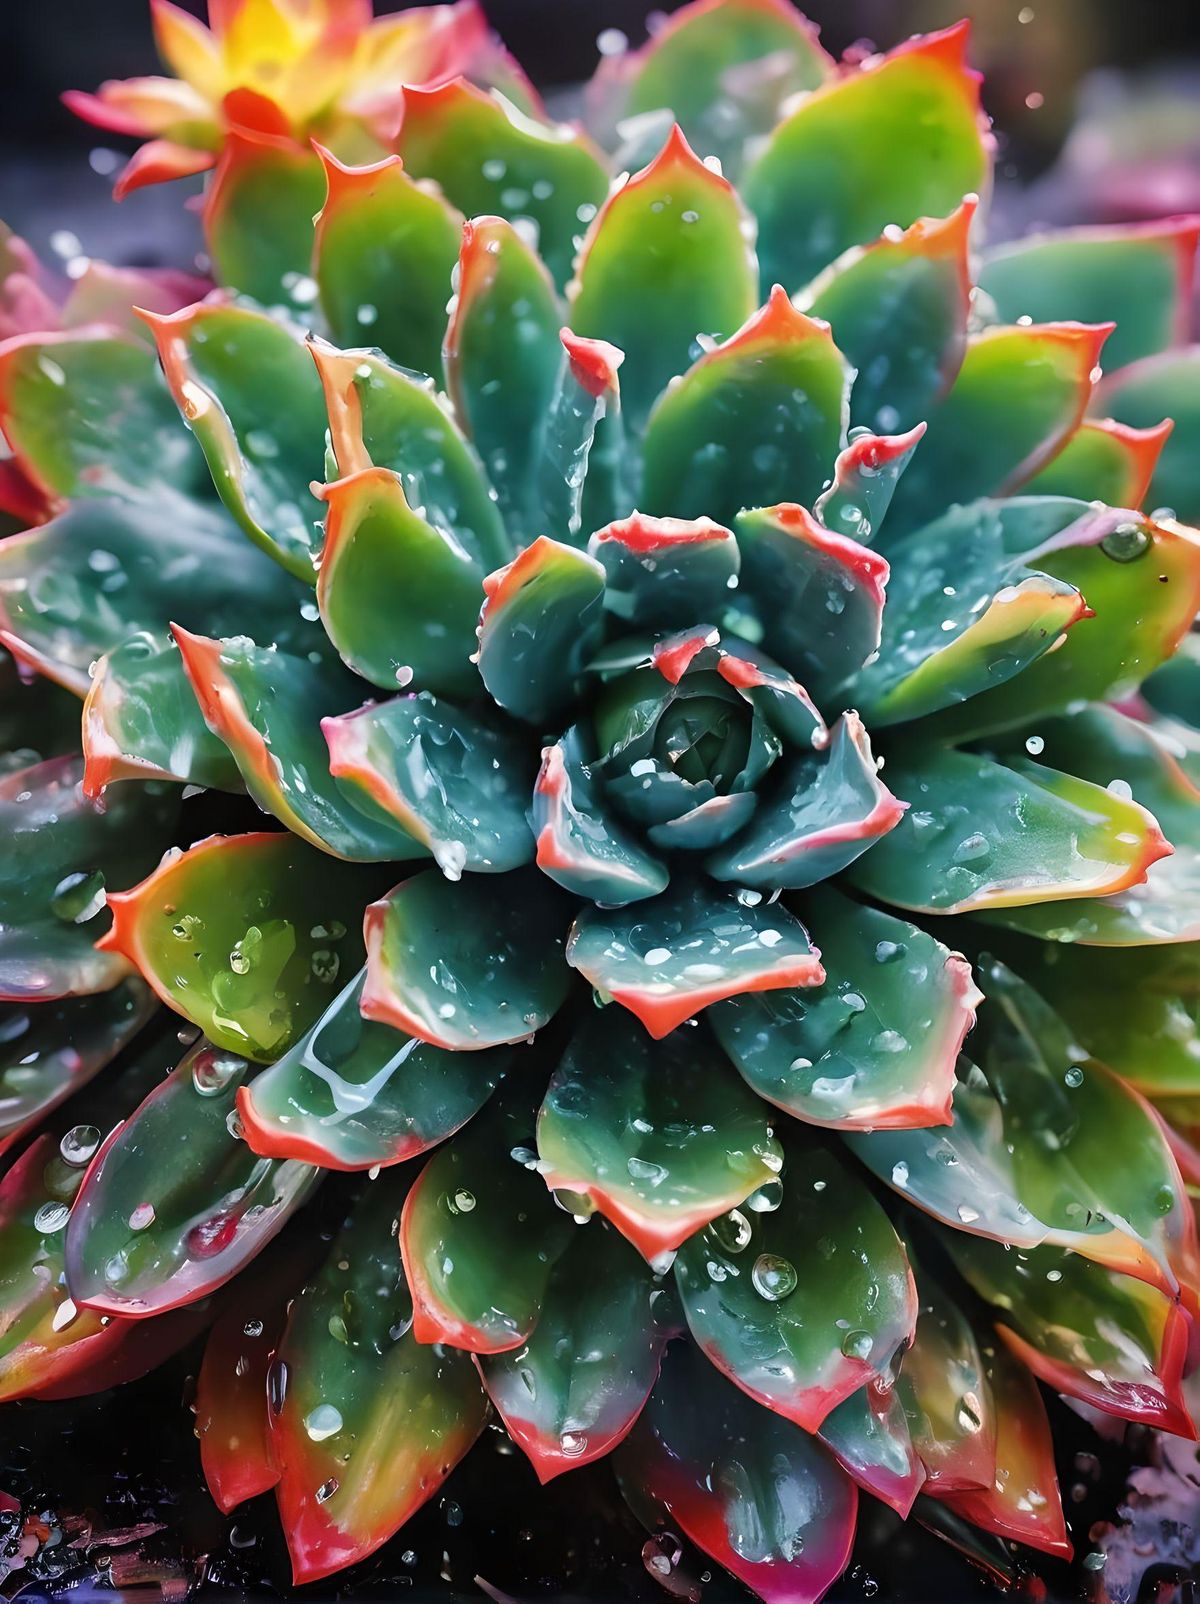 acrylic colors splash on flower-like succulent plants, multiple bright colors, raining day, perfect illuminating light 